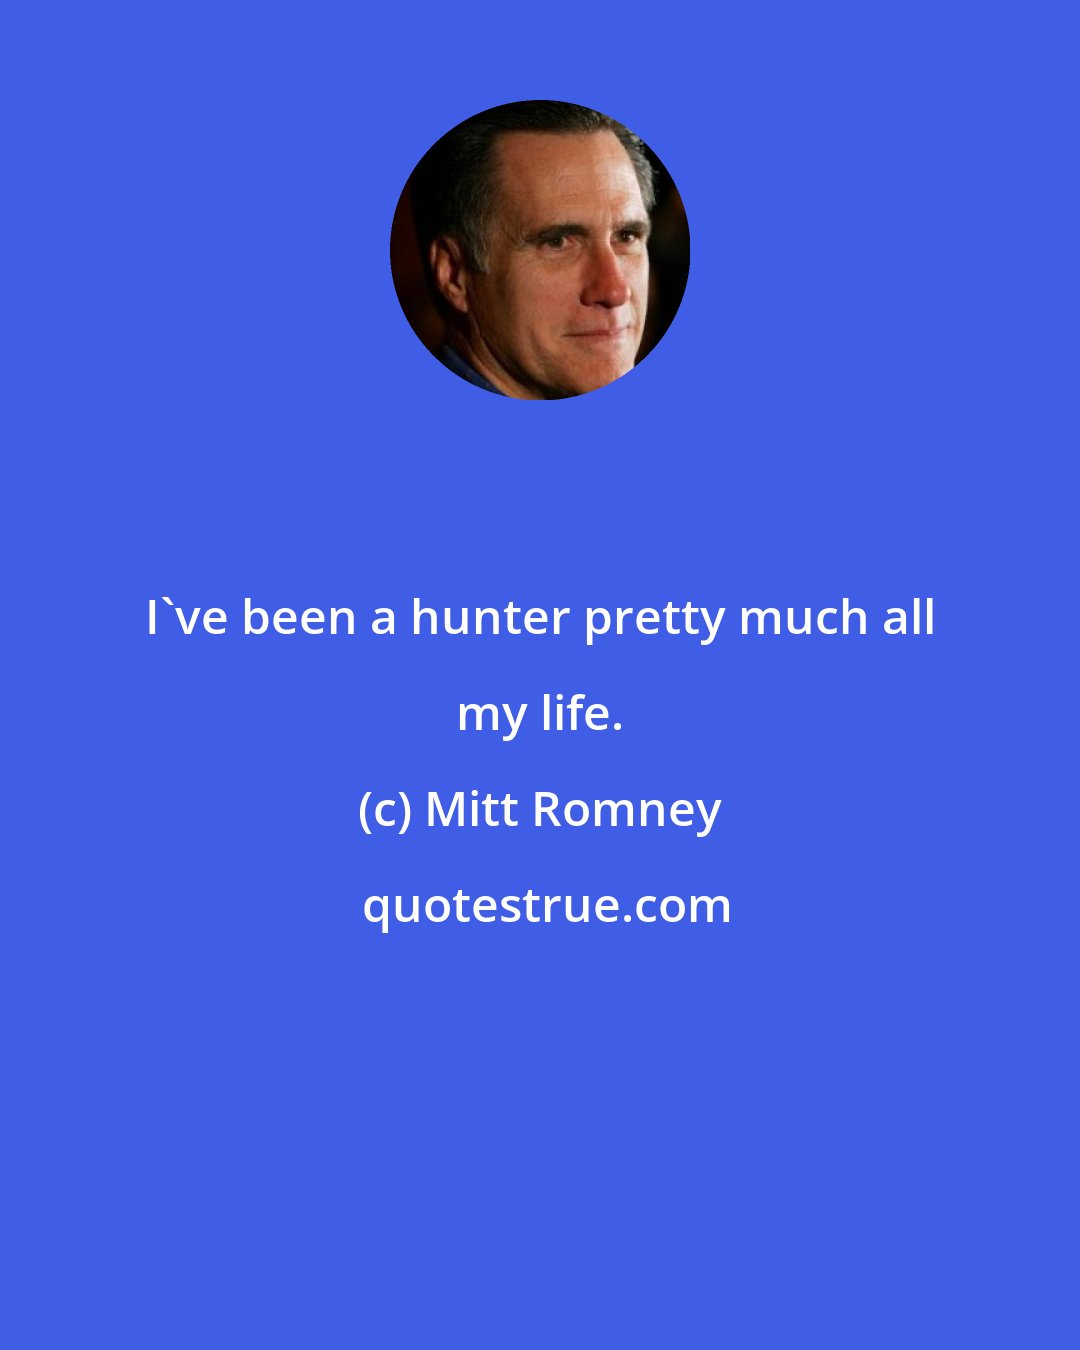 Mitt Romney: I've been a hunter pretty much all my life.